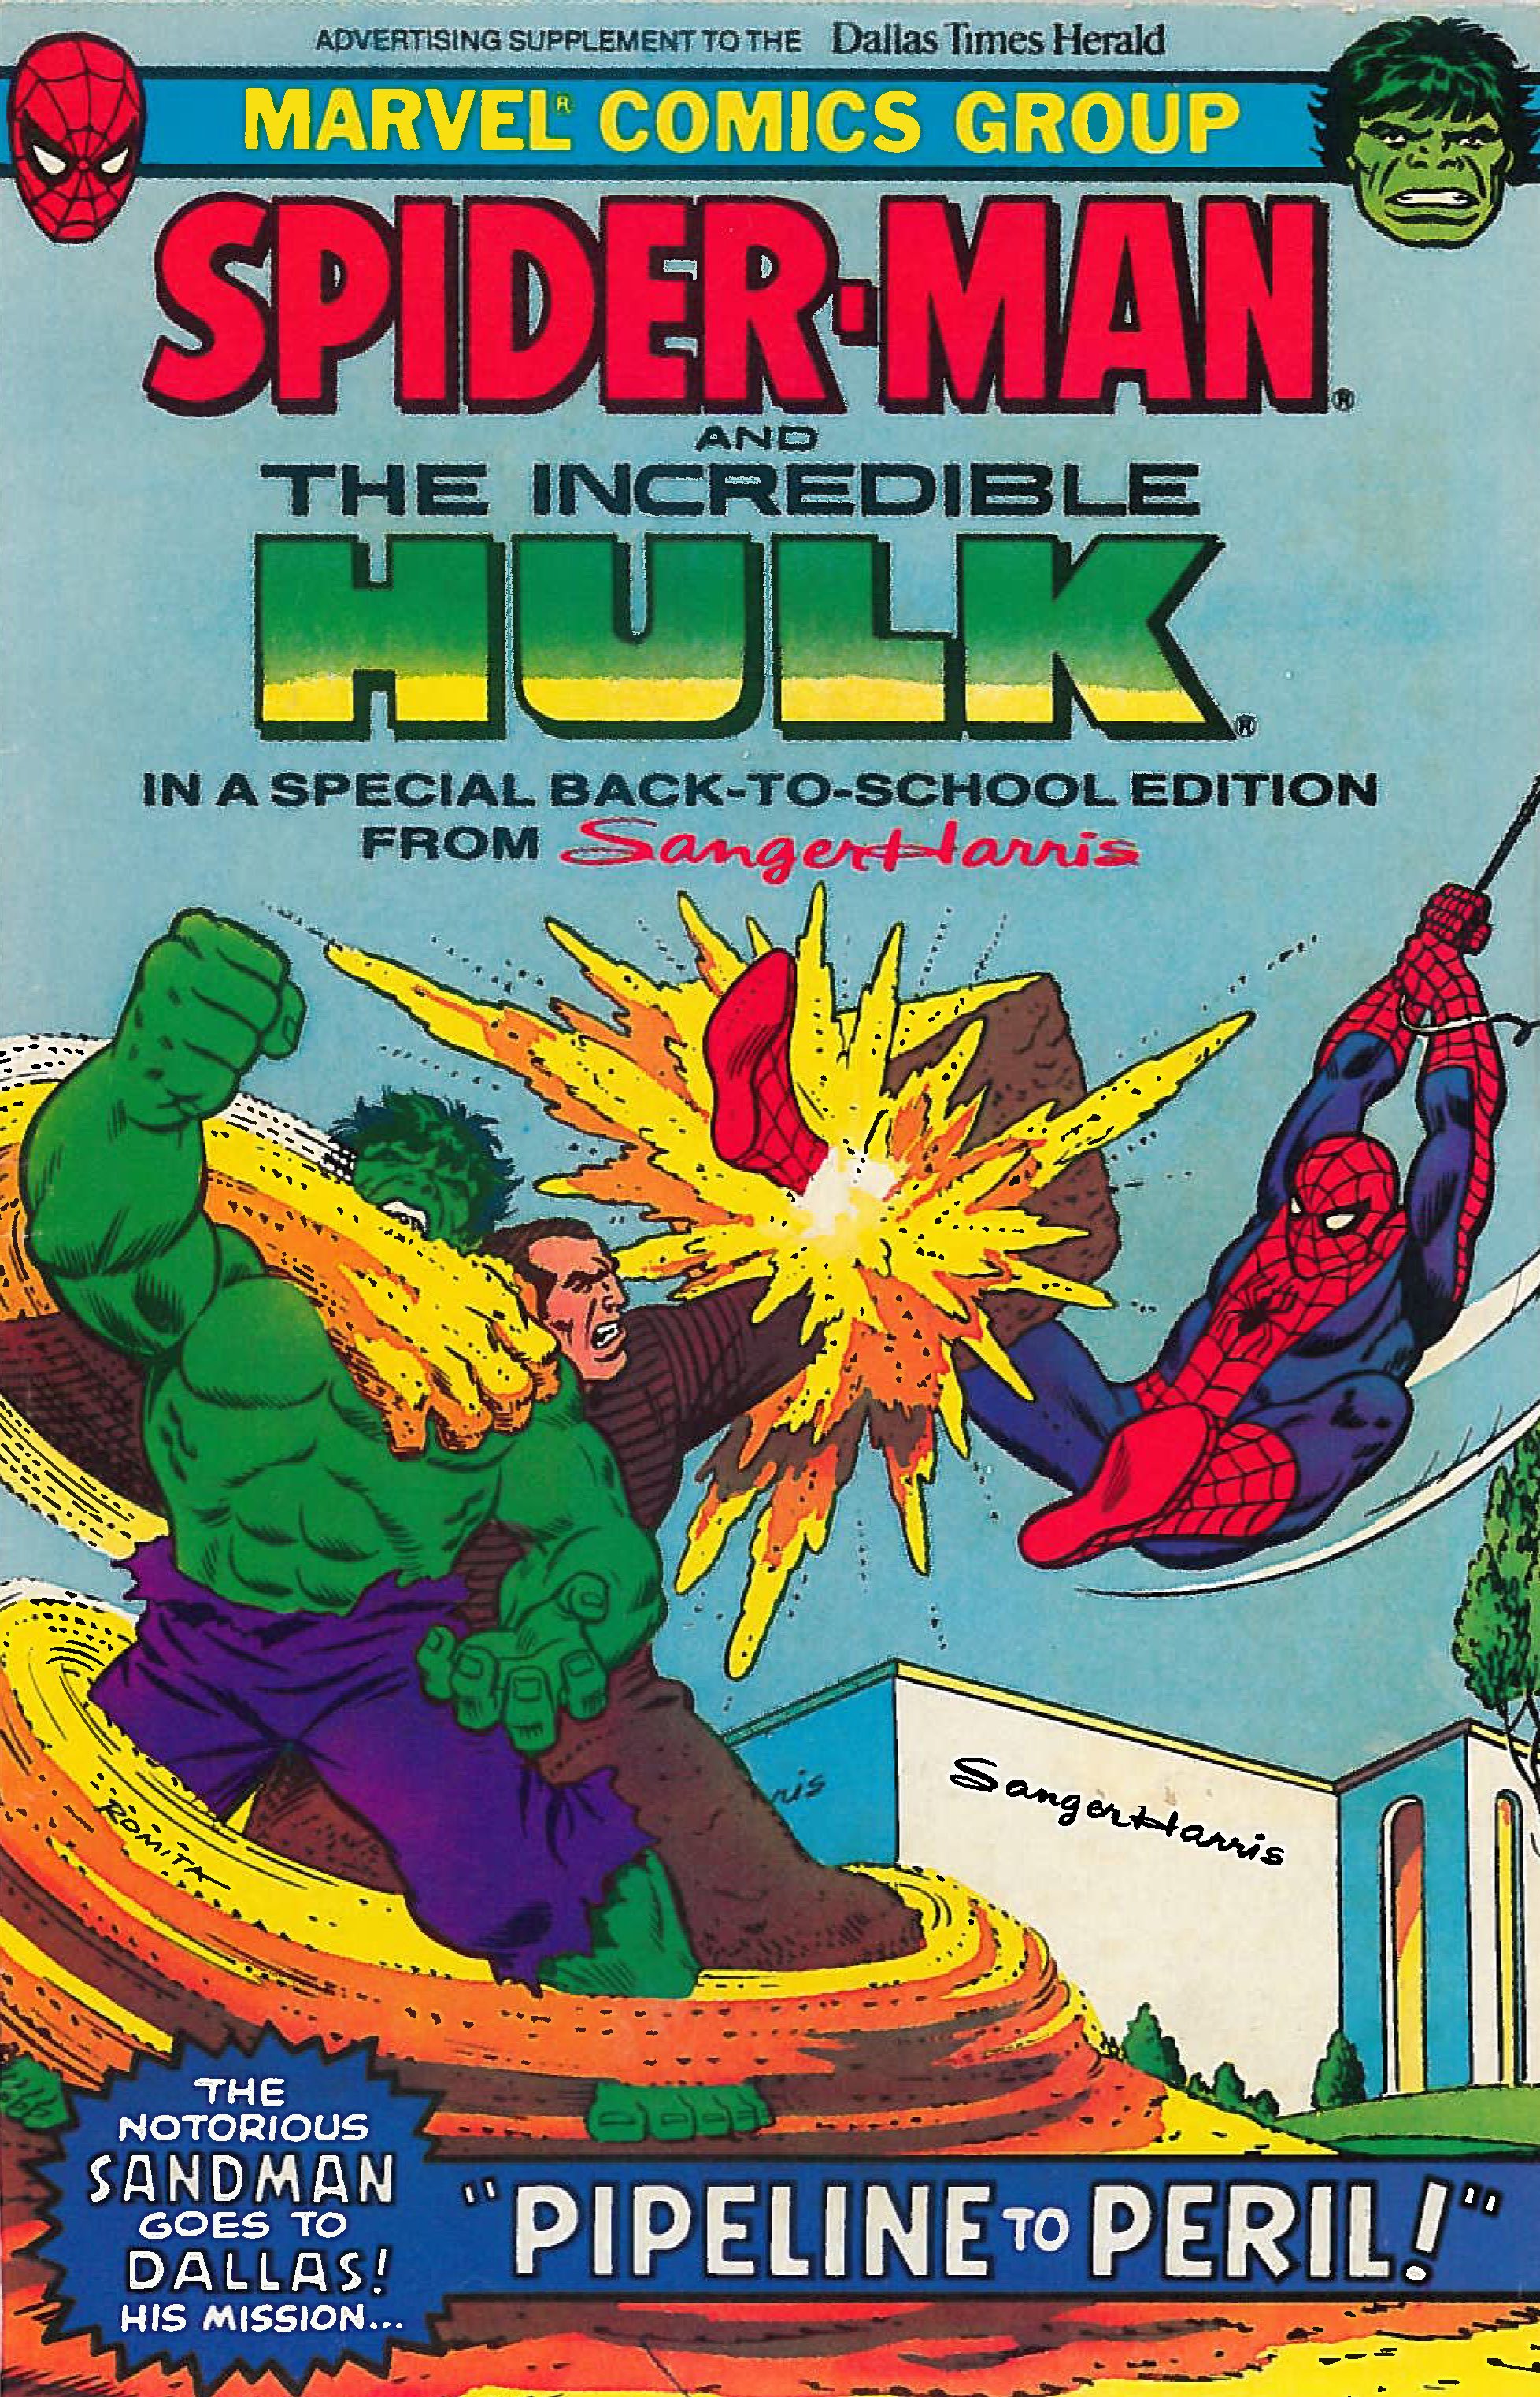 Spider-Man vs. The Hulk At the 1980 Lake Placid Winter Olympics